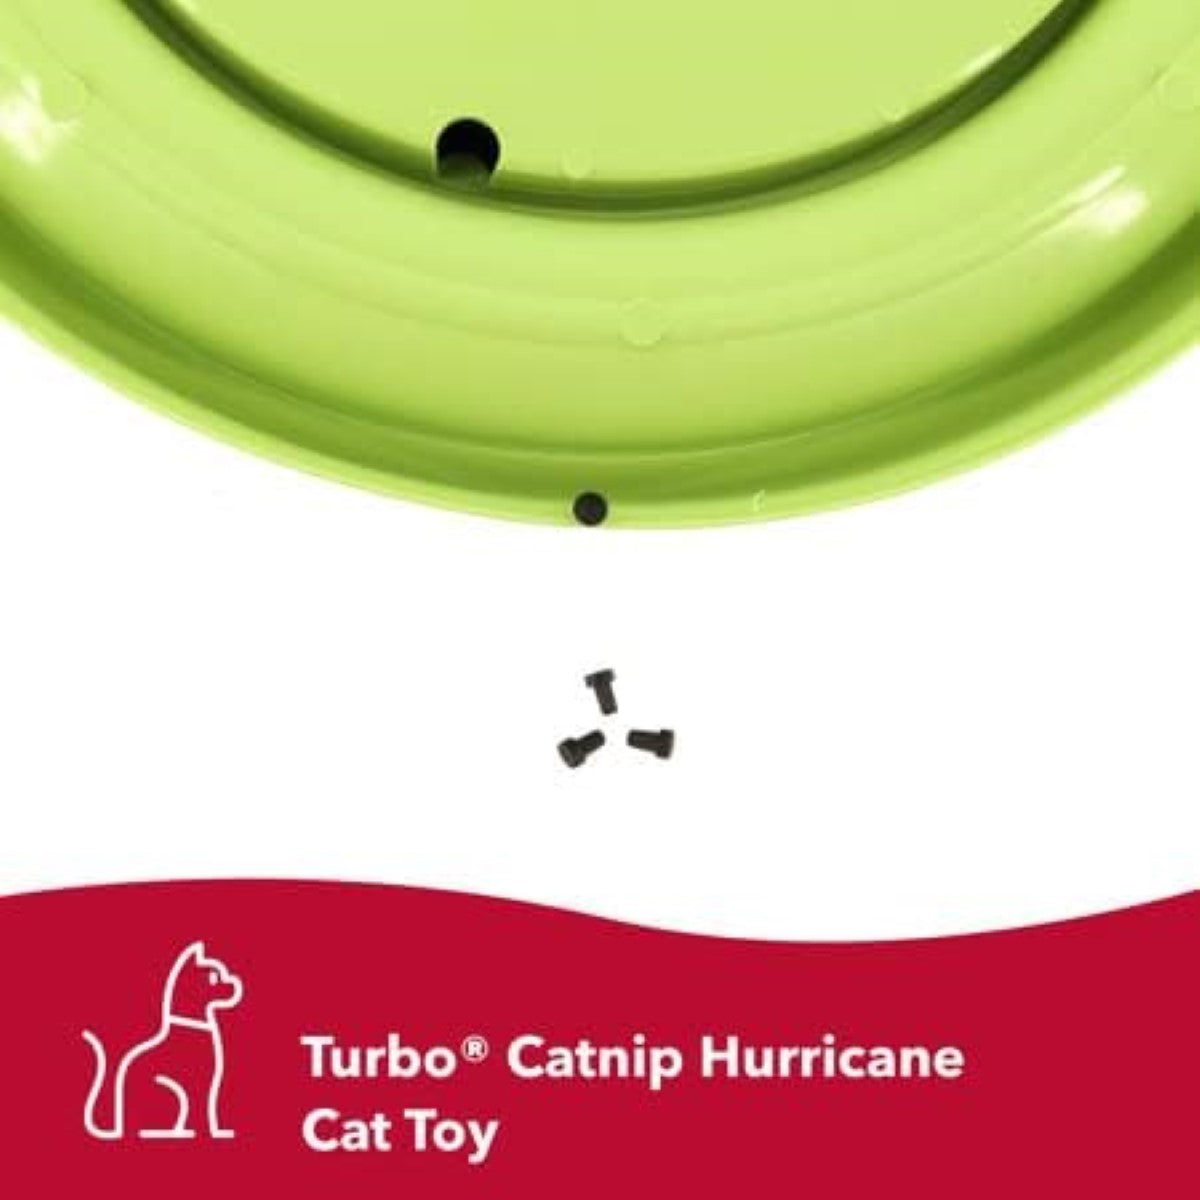 Bergan by Coastal Turbo Catnip Hurricane Cat Toy Blue / Green